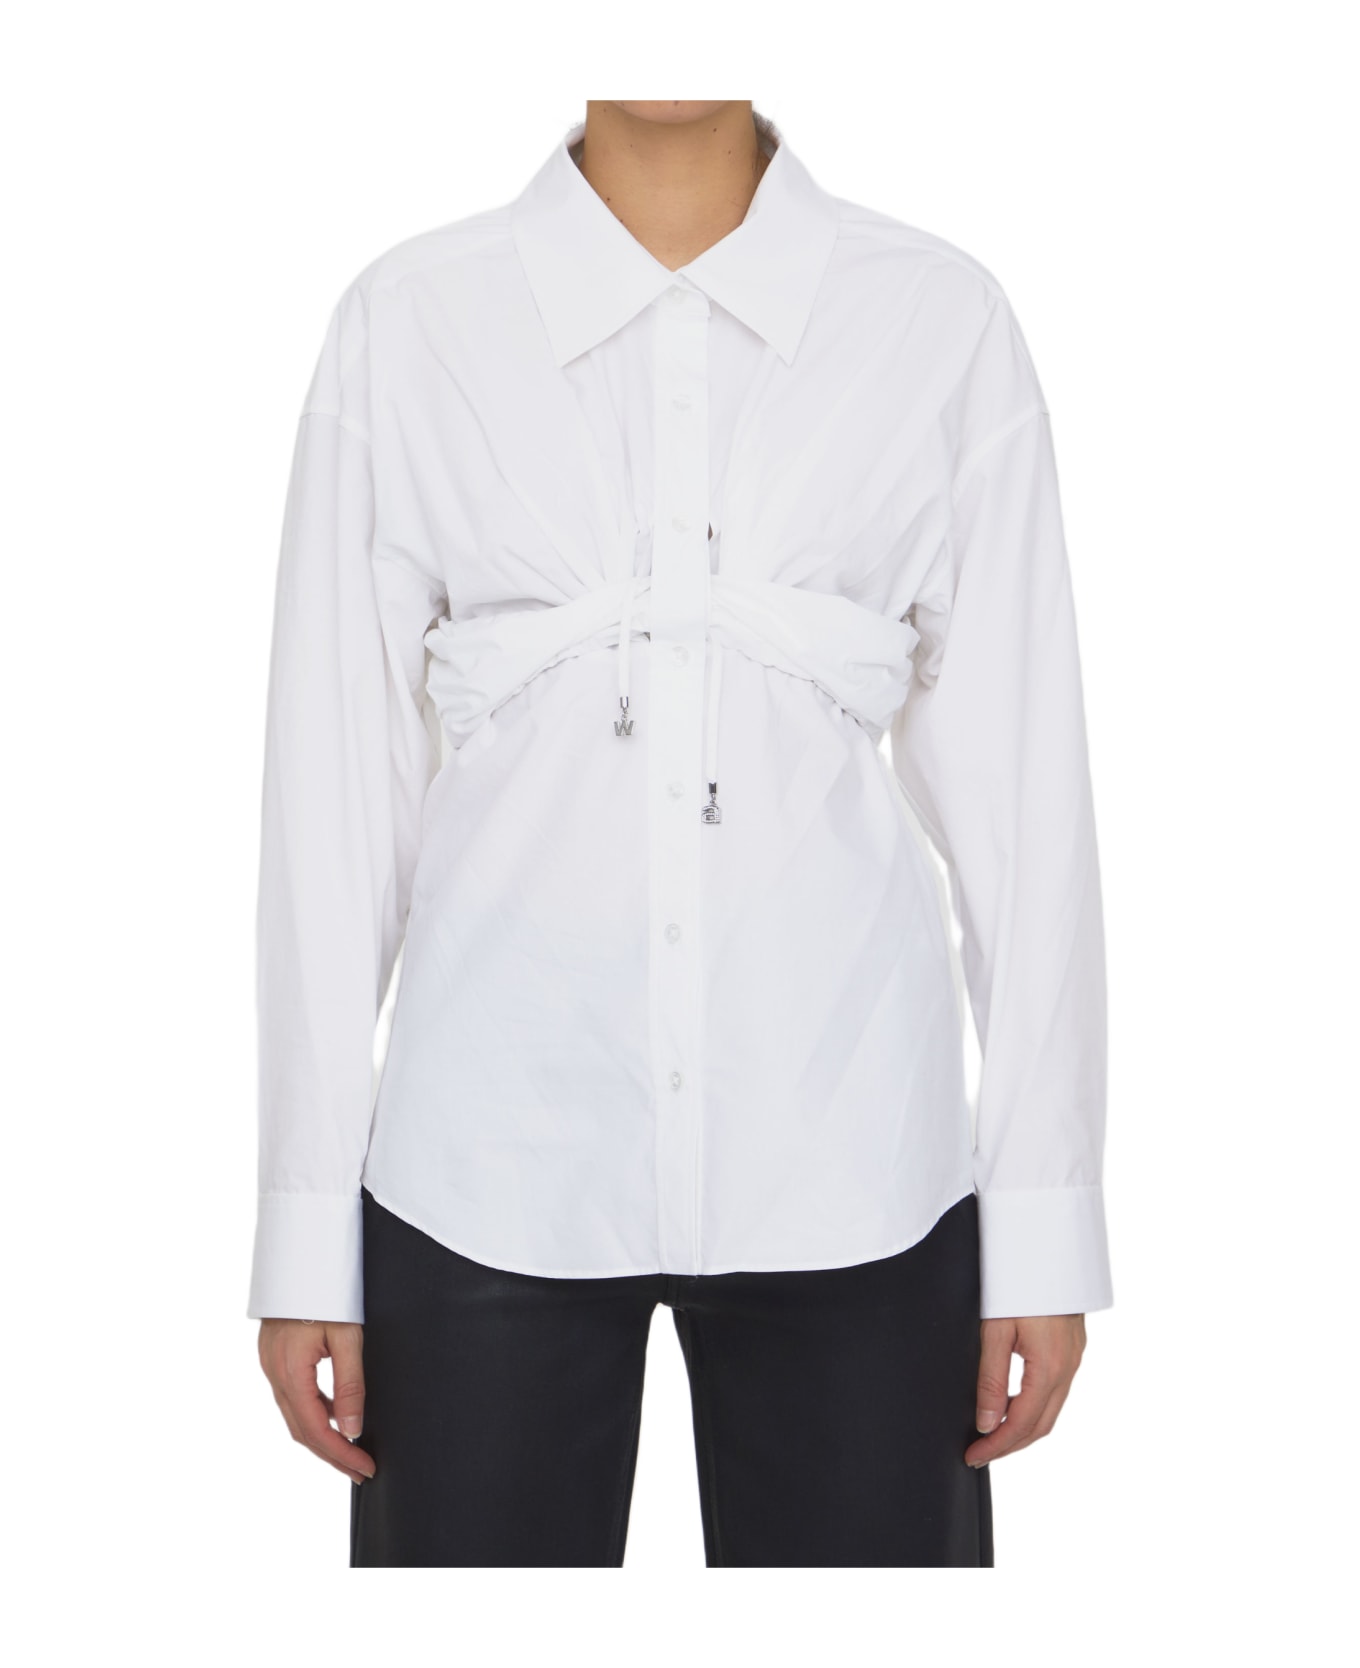 Alexander Wang Ruched White Shirt - WHITE